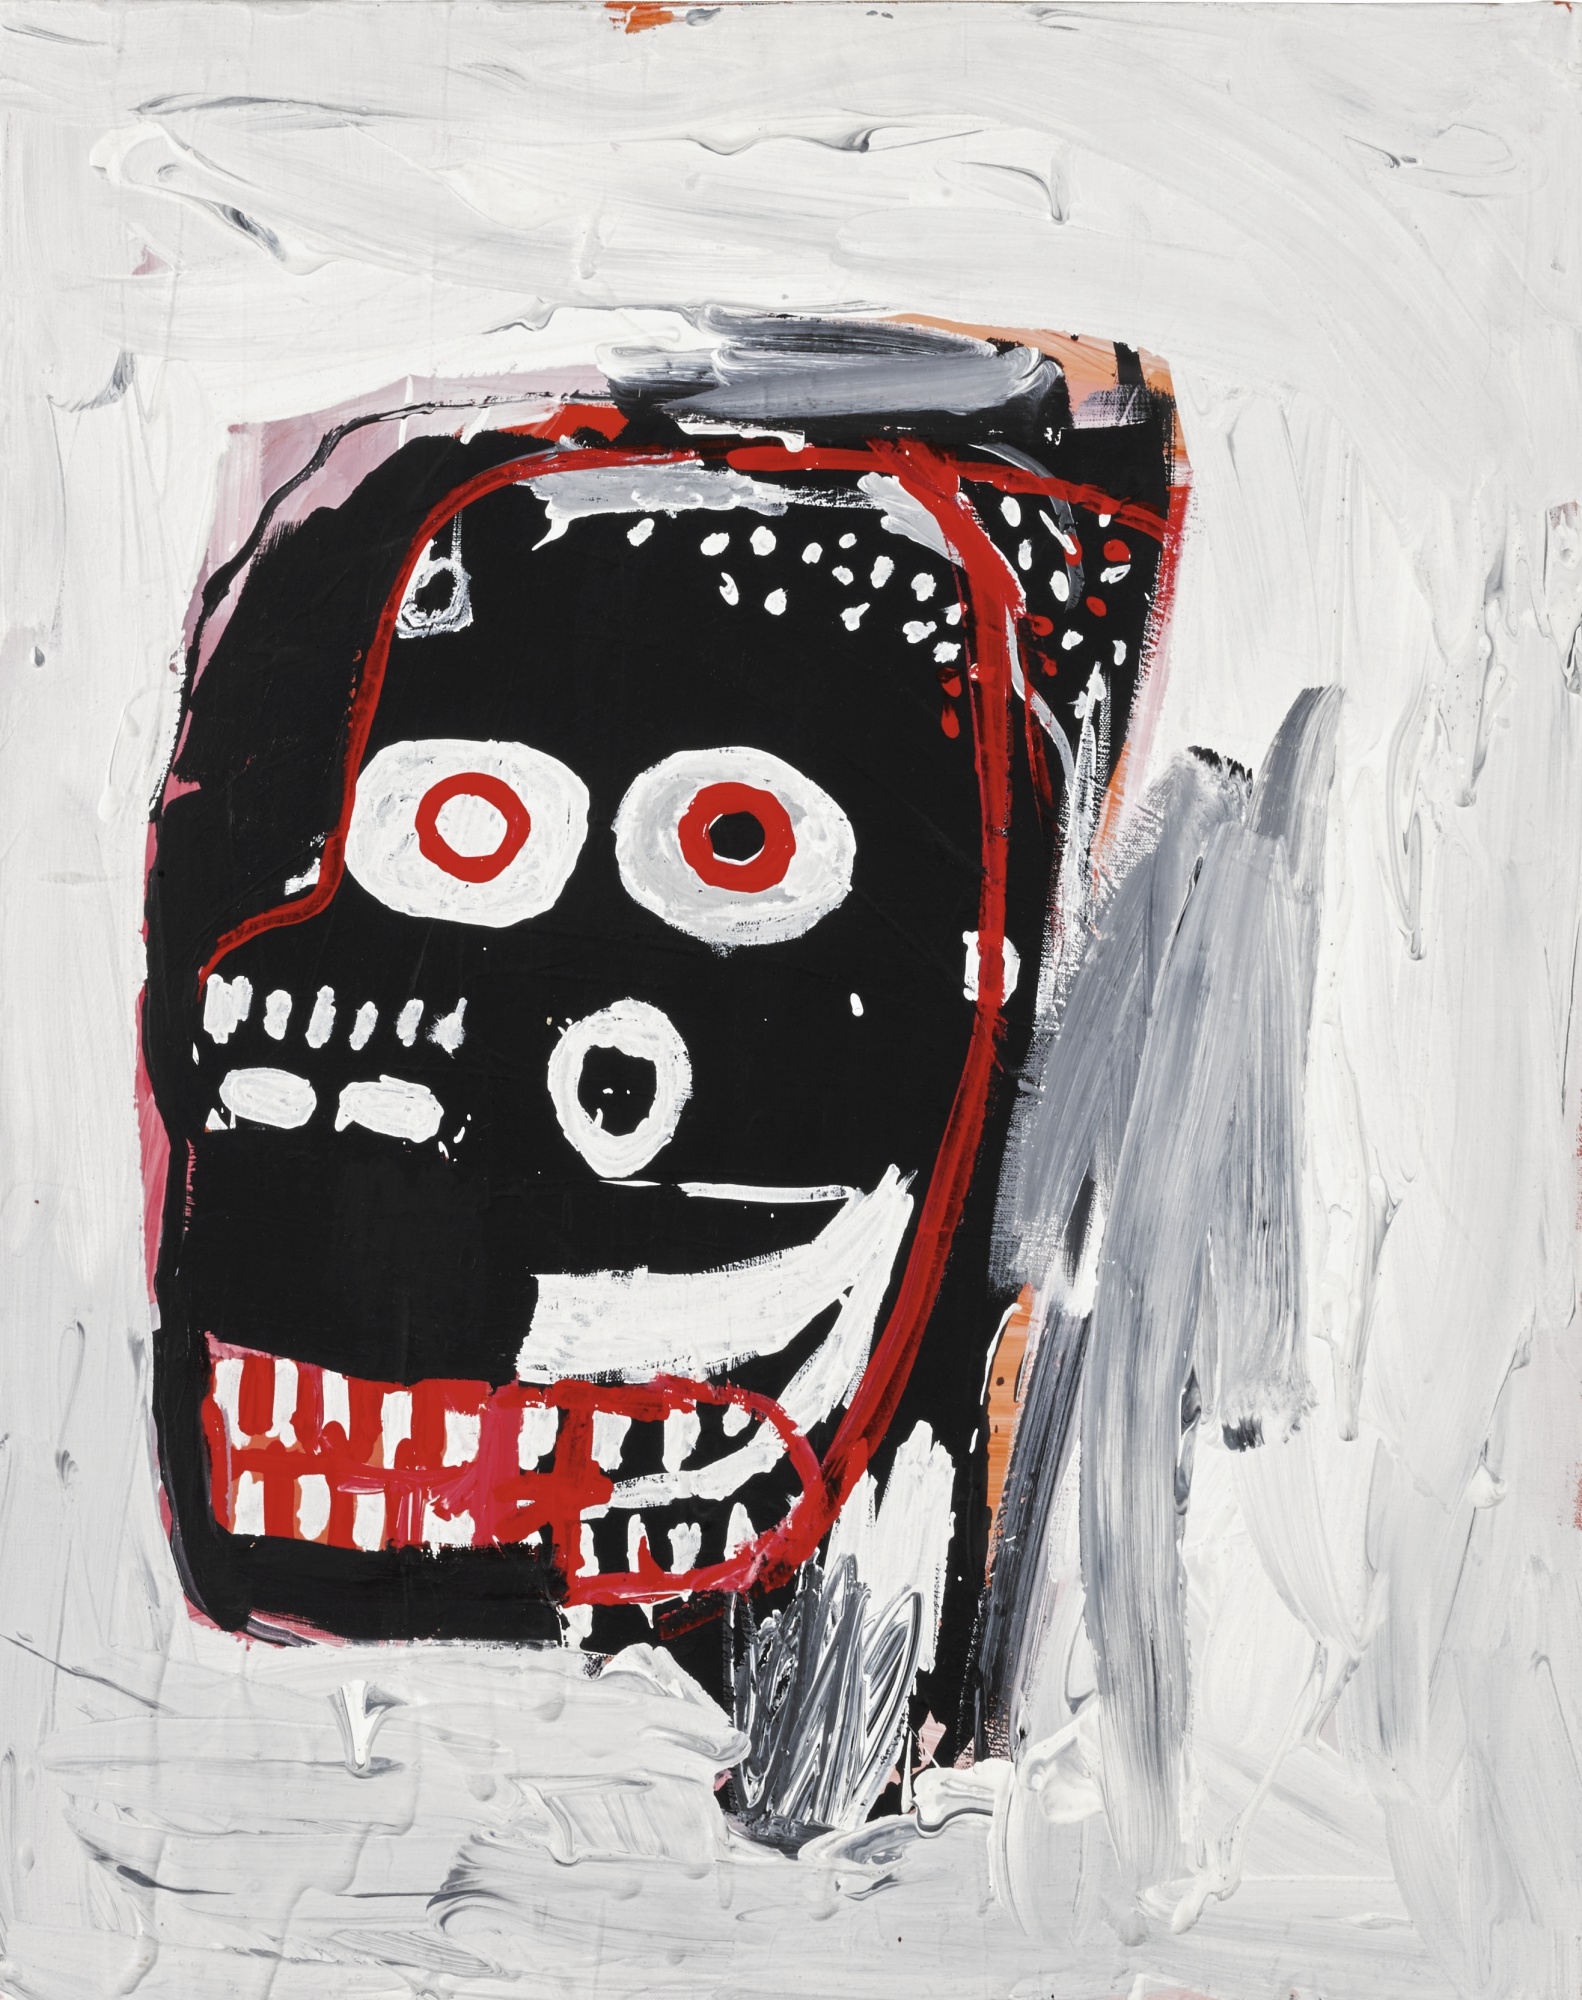 UNTITLED by Jean-Michel Basquiat, 1983